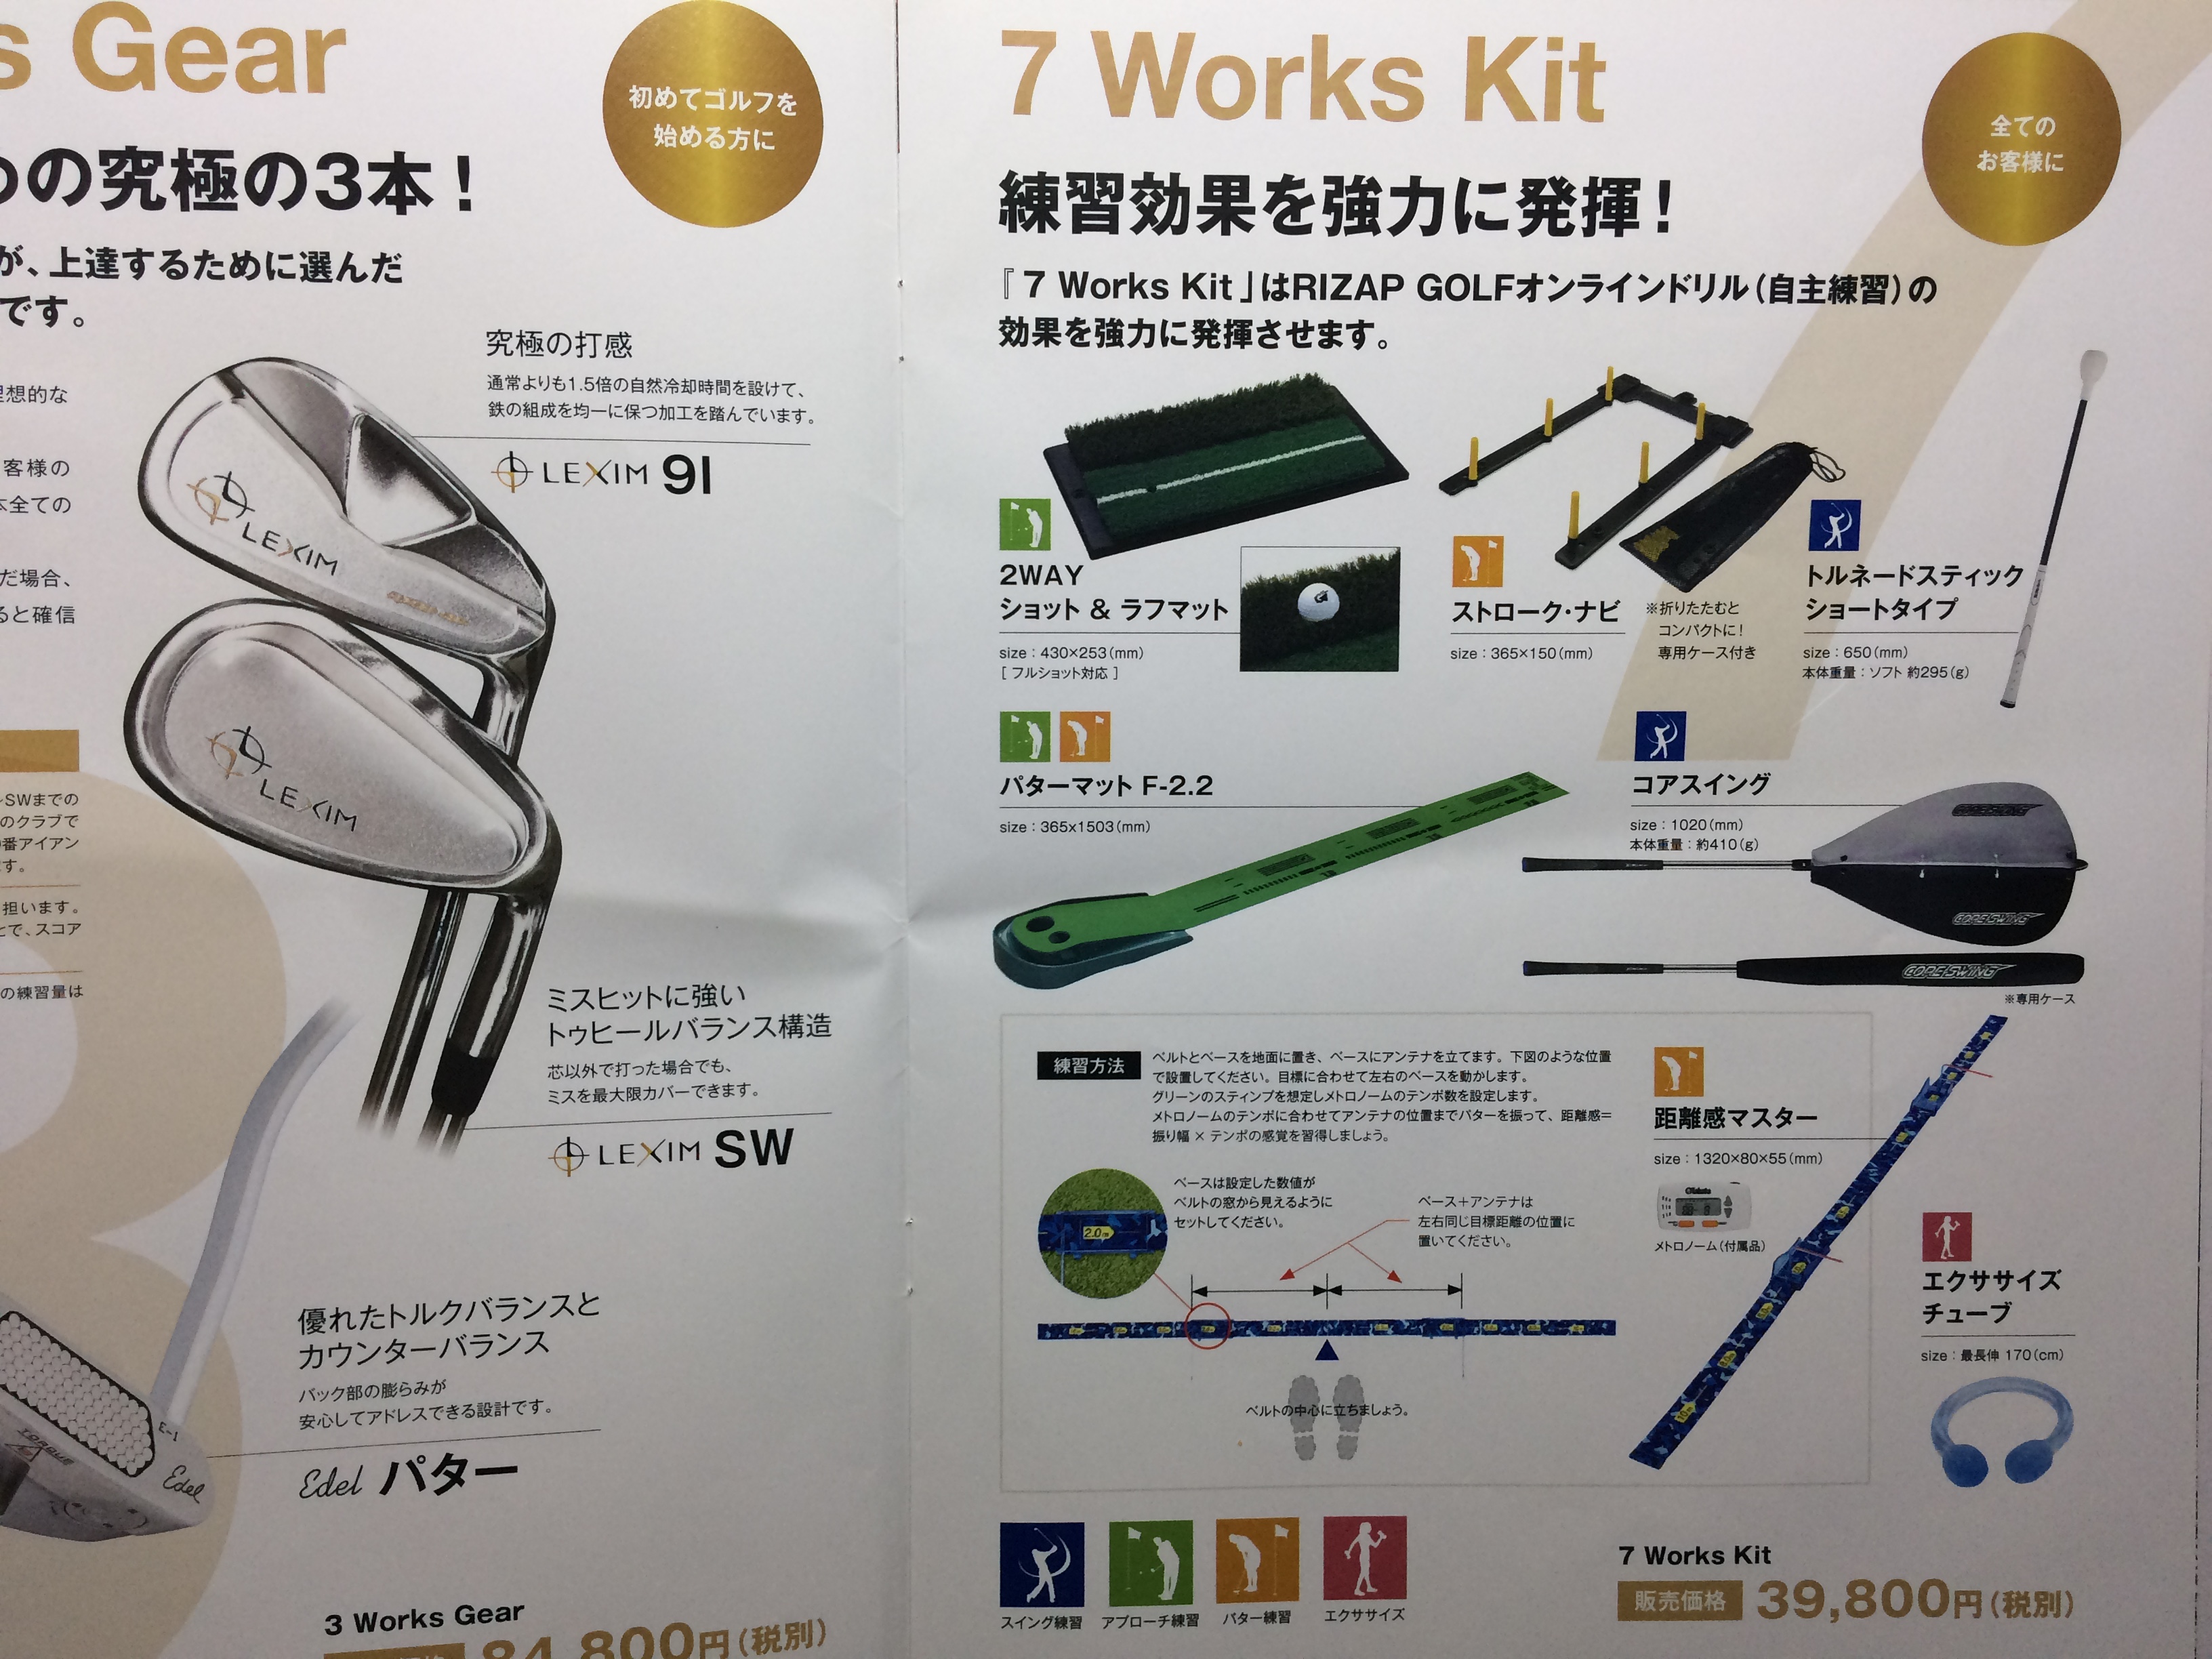 7 Works Kit